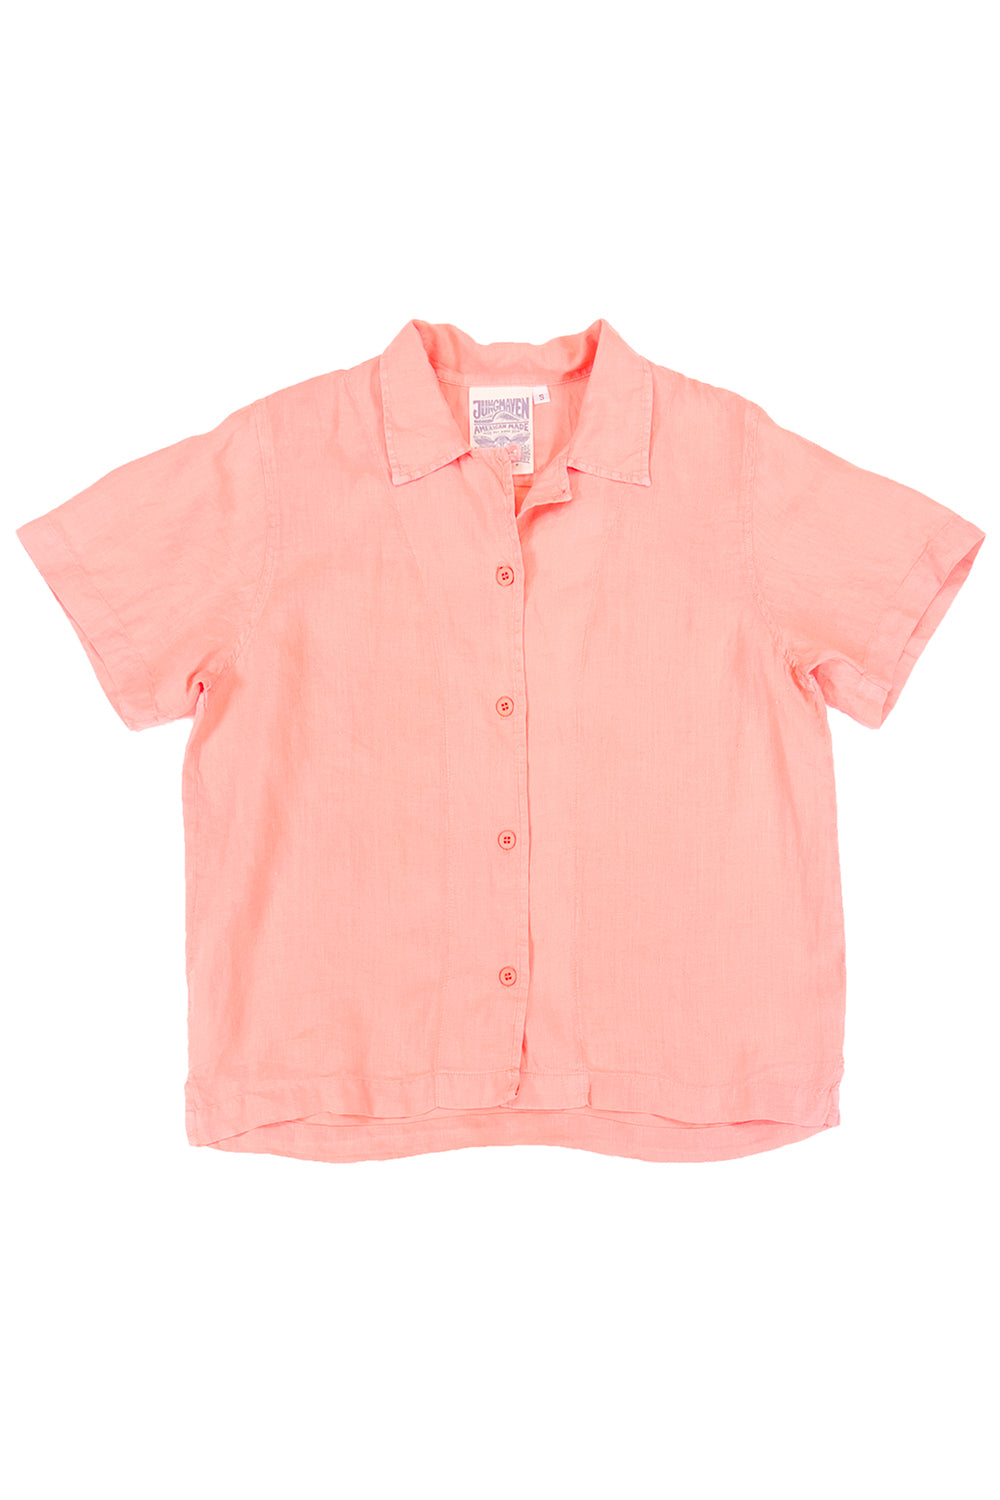 Tucson Shirt | Jungmaven Hemp Clothing & Accessories / Color: Pink Salmon